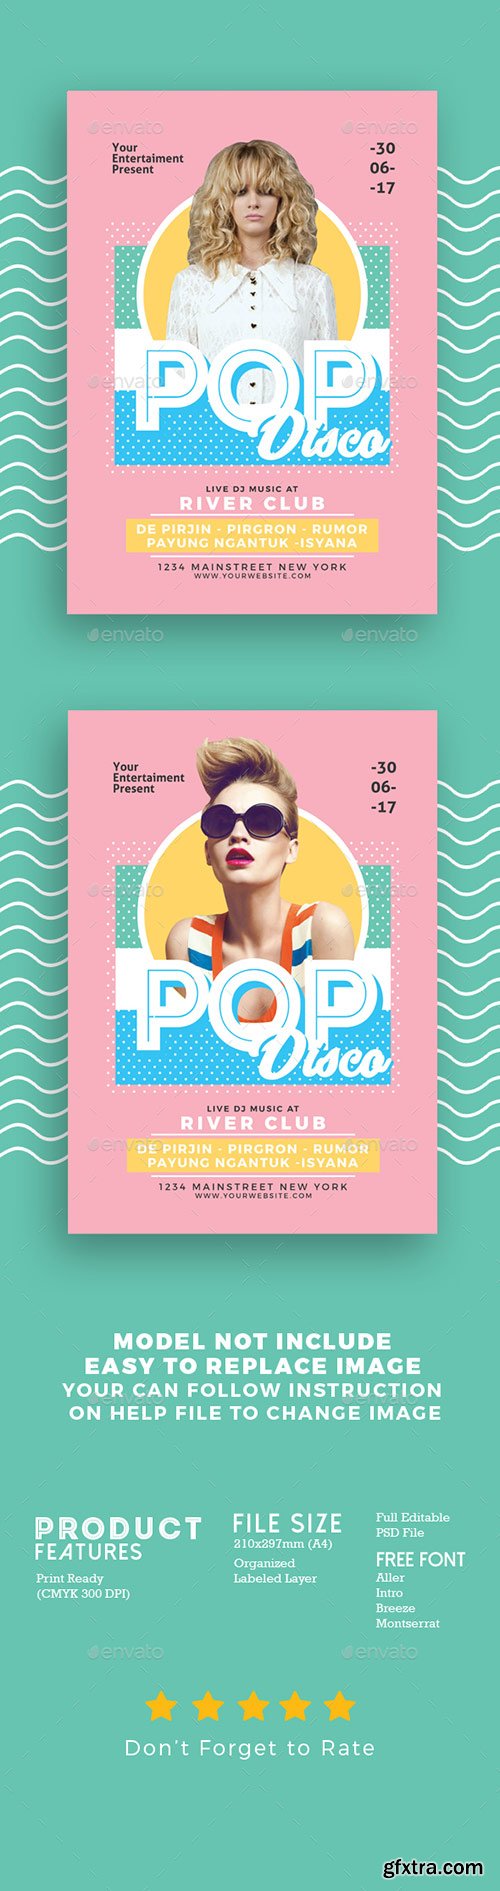 Graphicriver - Pop Disco Flyer 20197184